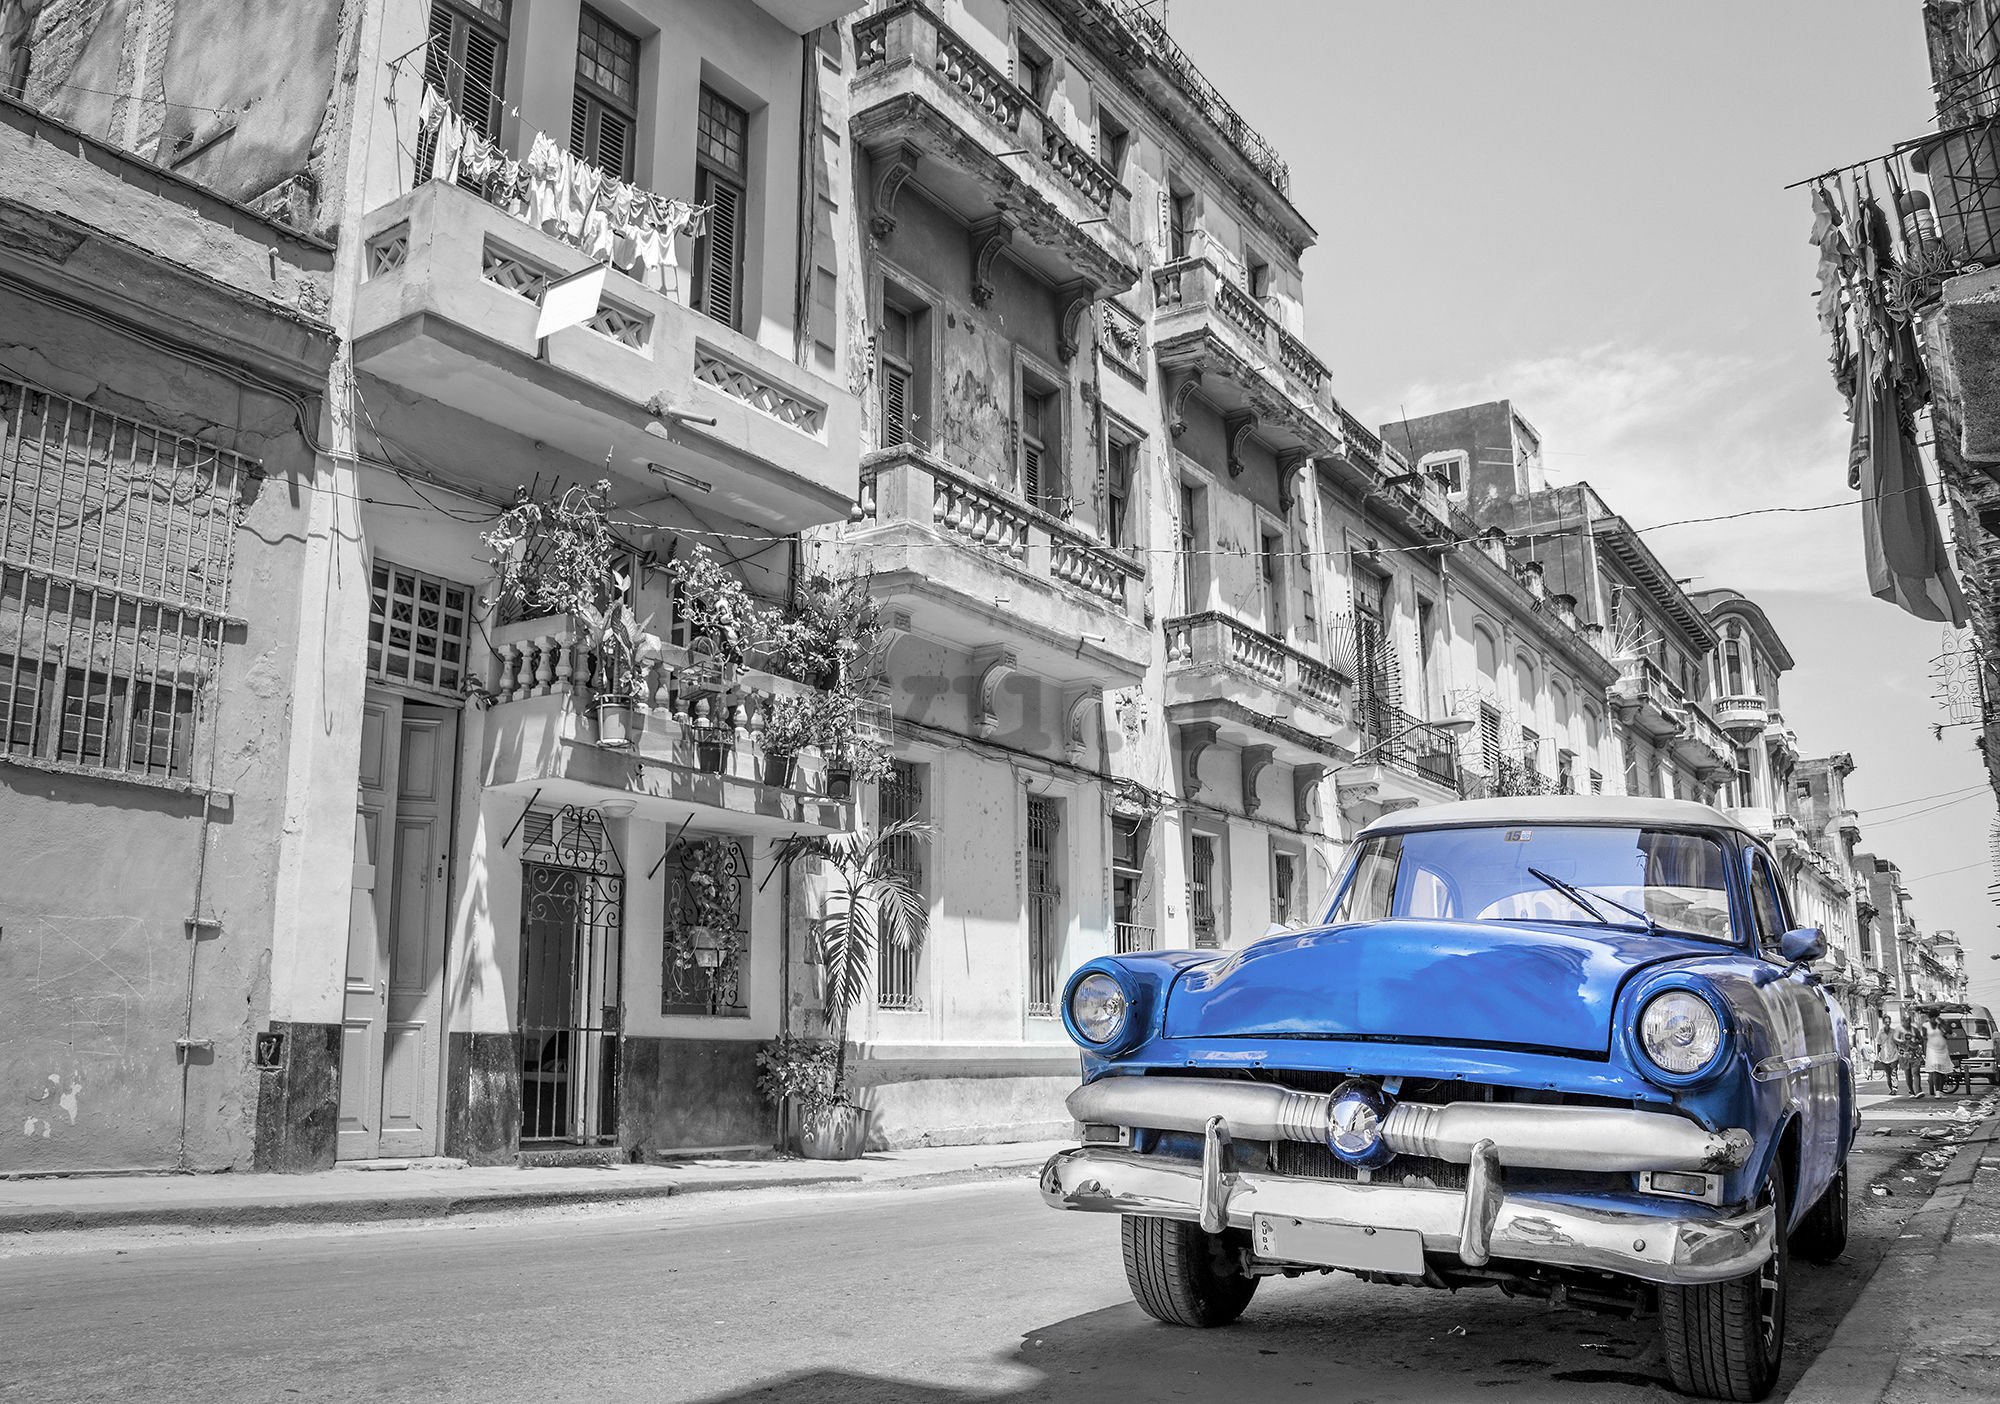 Fototapet vlies: Mașină albastră Havana - 254x368 cm